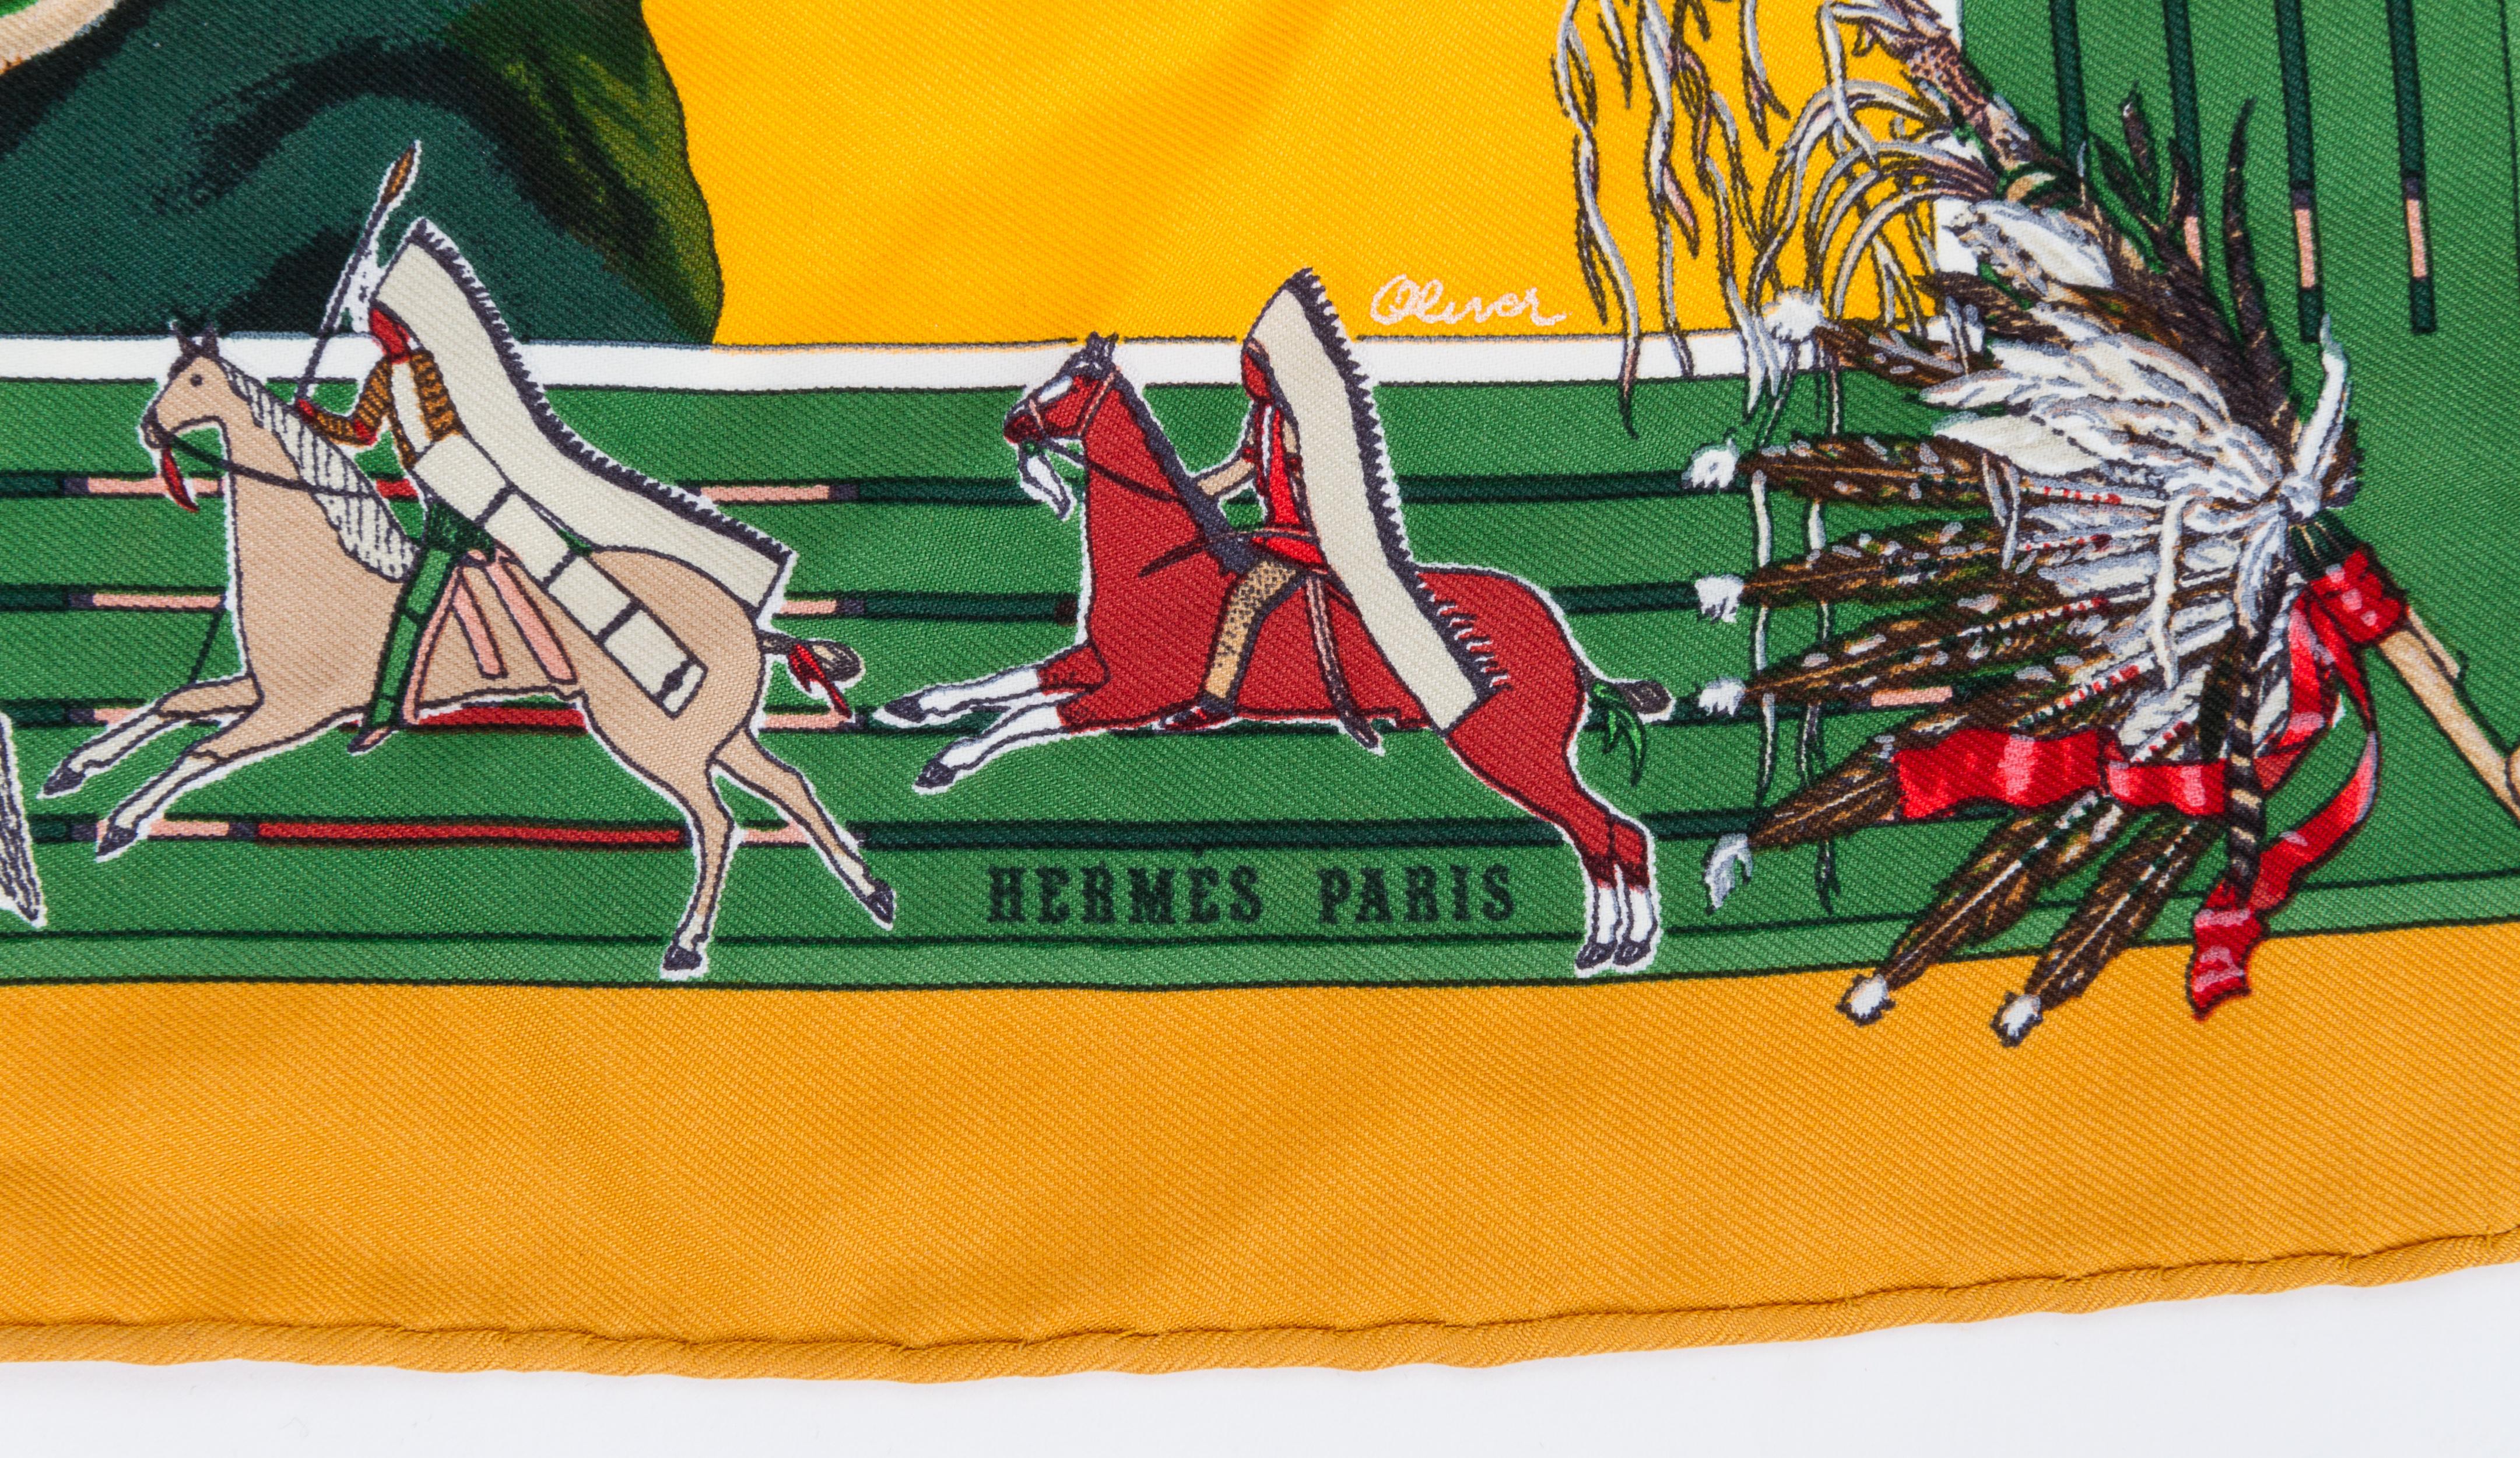 Hermès Pani La Shar Pawnee silk twill pochette scarf designed by Kermit Oliver. Hand-rolled edges.